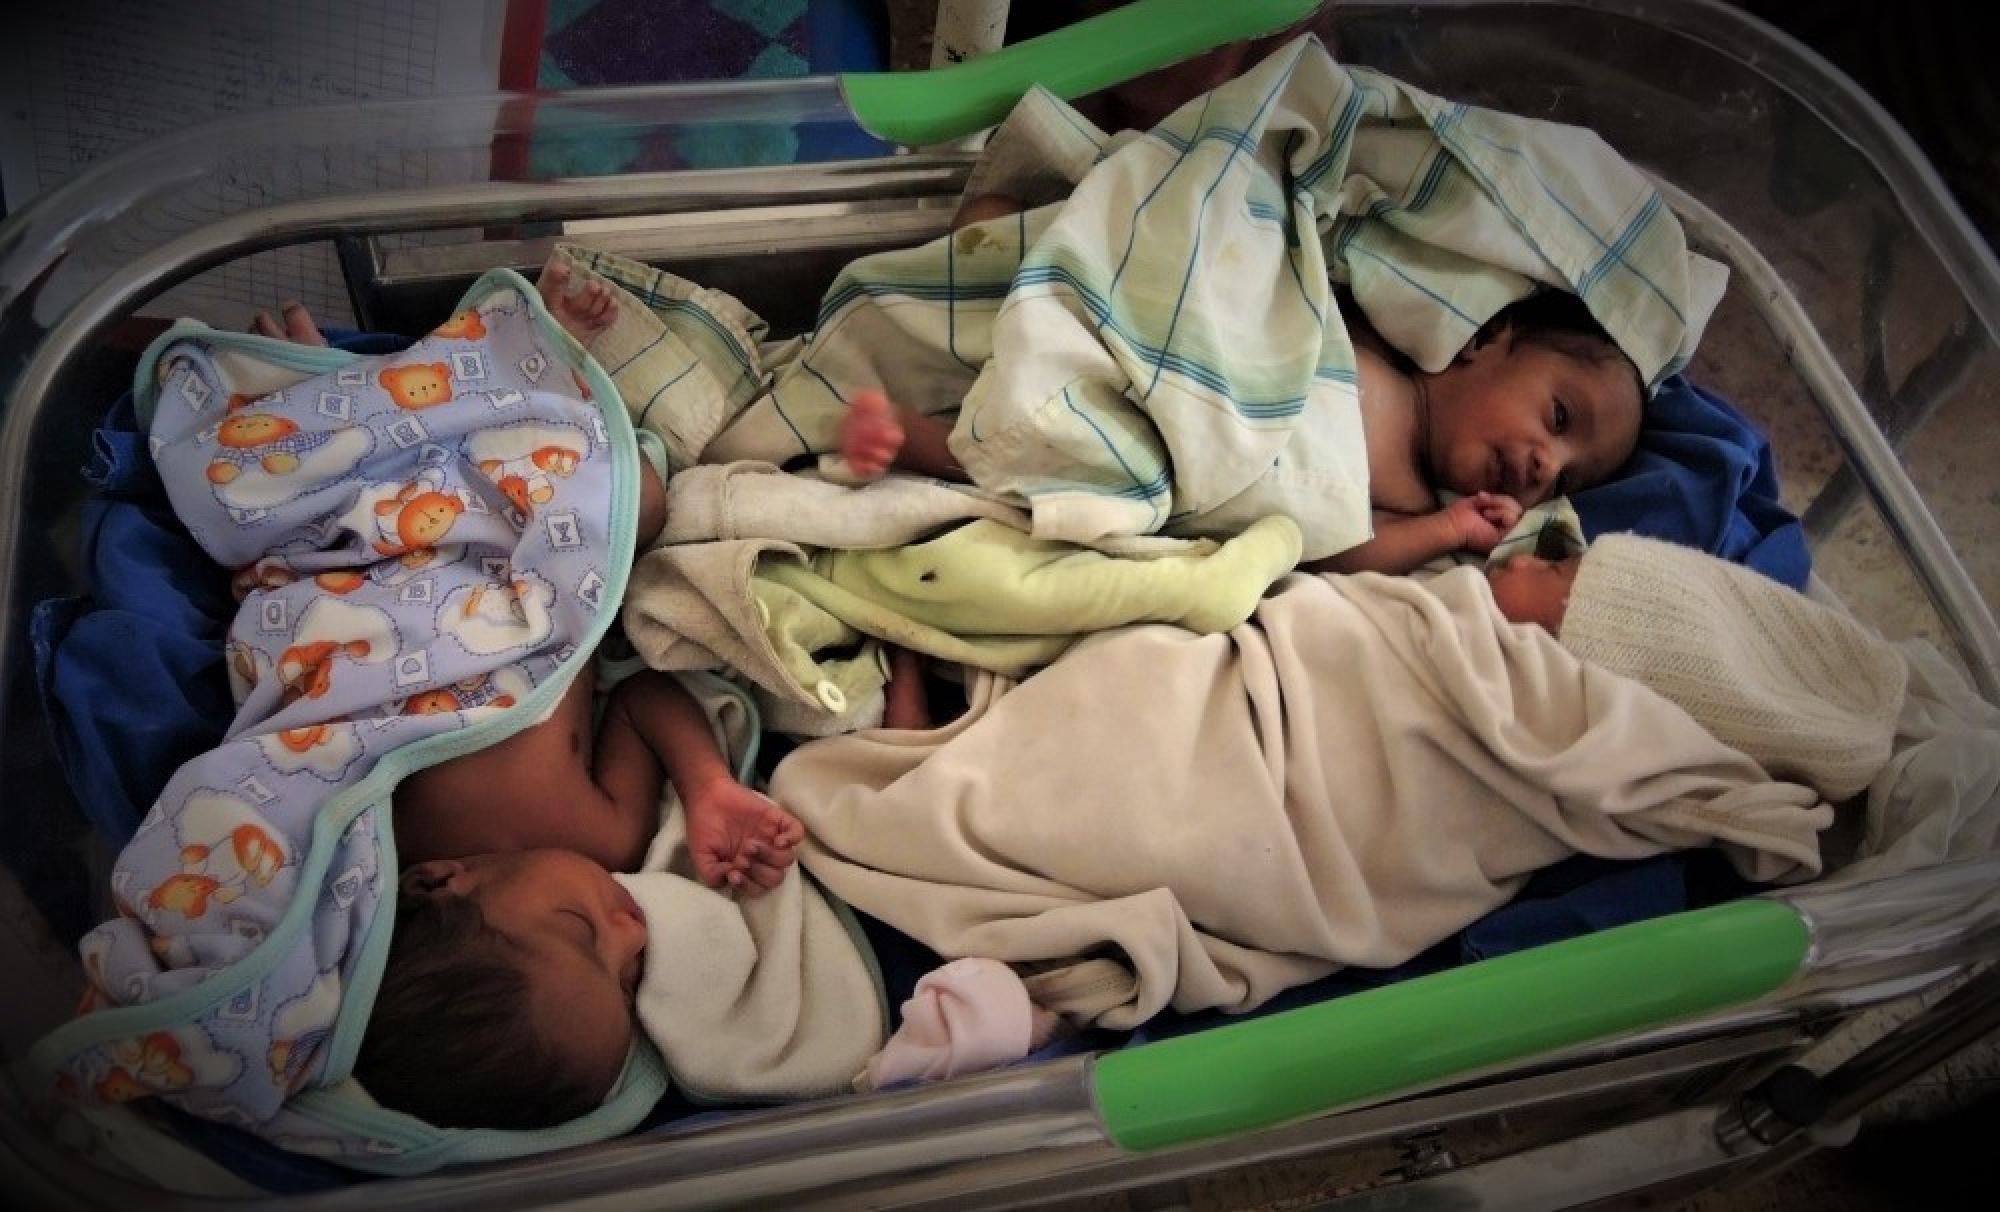 Twins are born at Attat Hospital